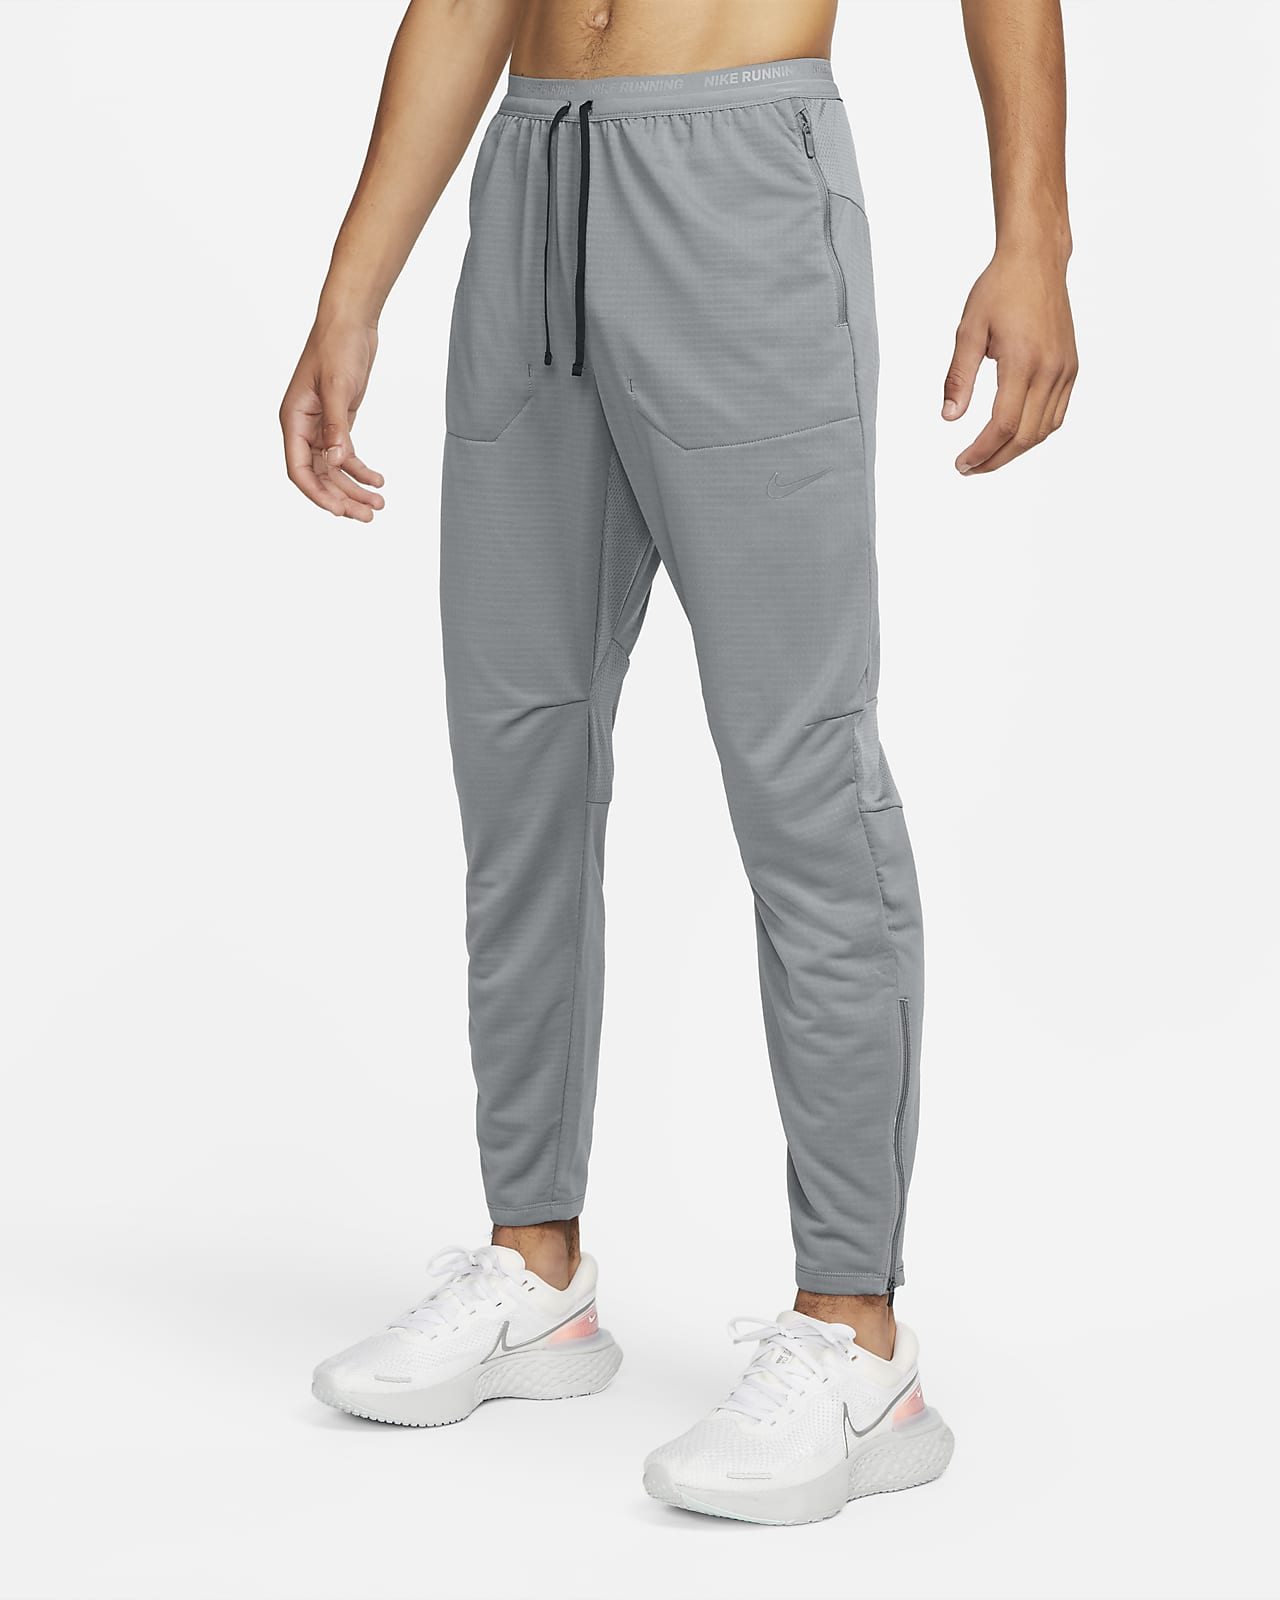 Pantaloni da running in maglia Dri-FIT Nike Phenom – Uomo